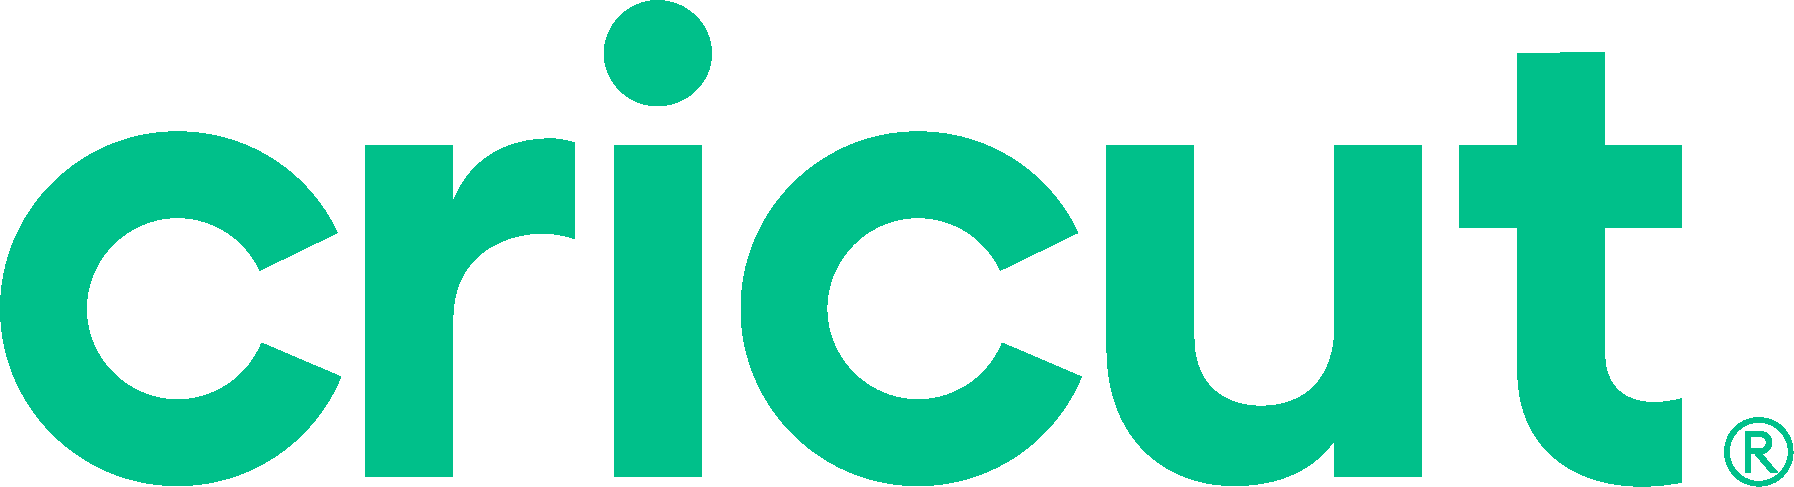 Cricut, Inc. logo